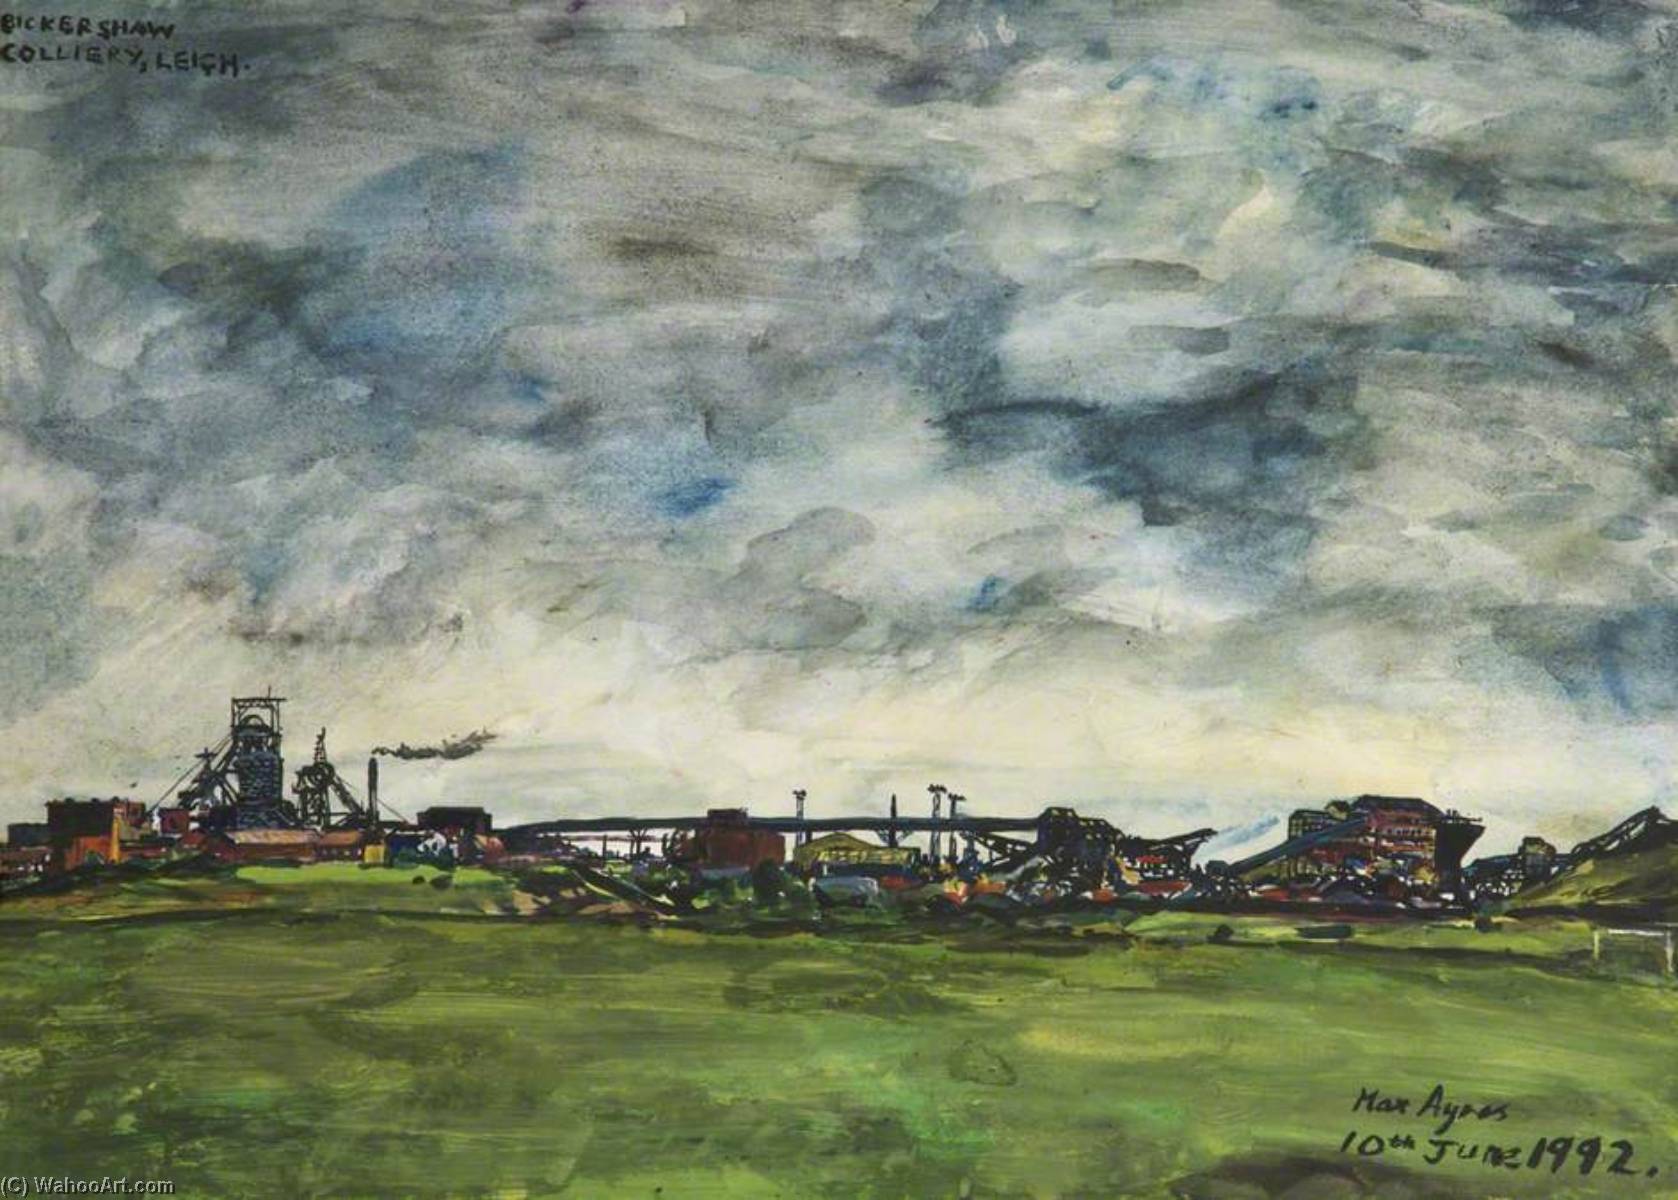 Bickershaw Colliery, Leigh, 1992 by Max Ayres Max Ayres | ArtsDot.com